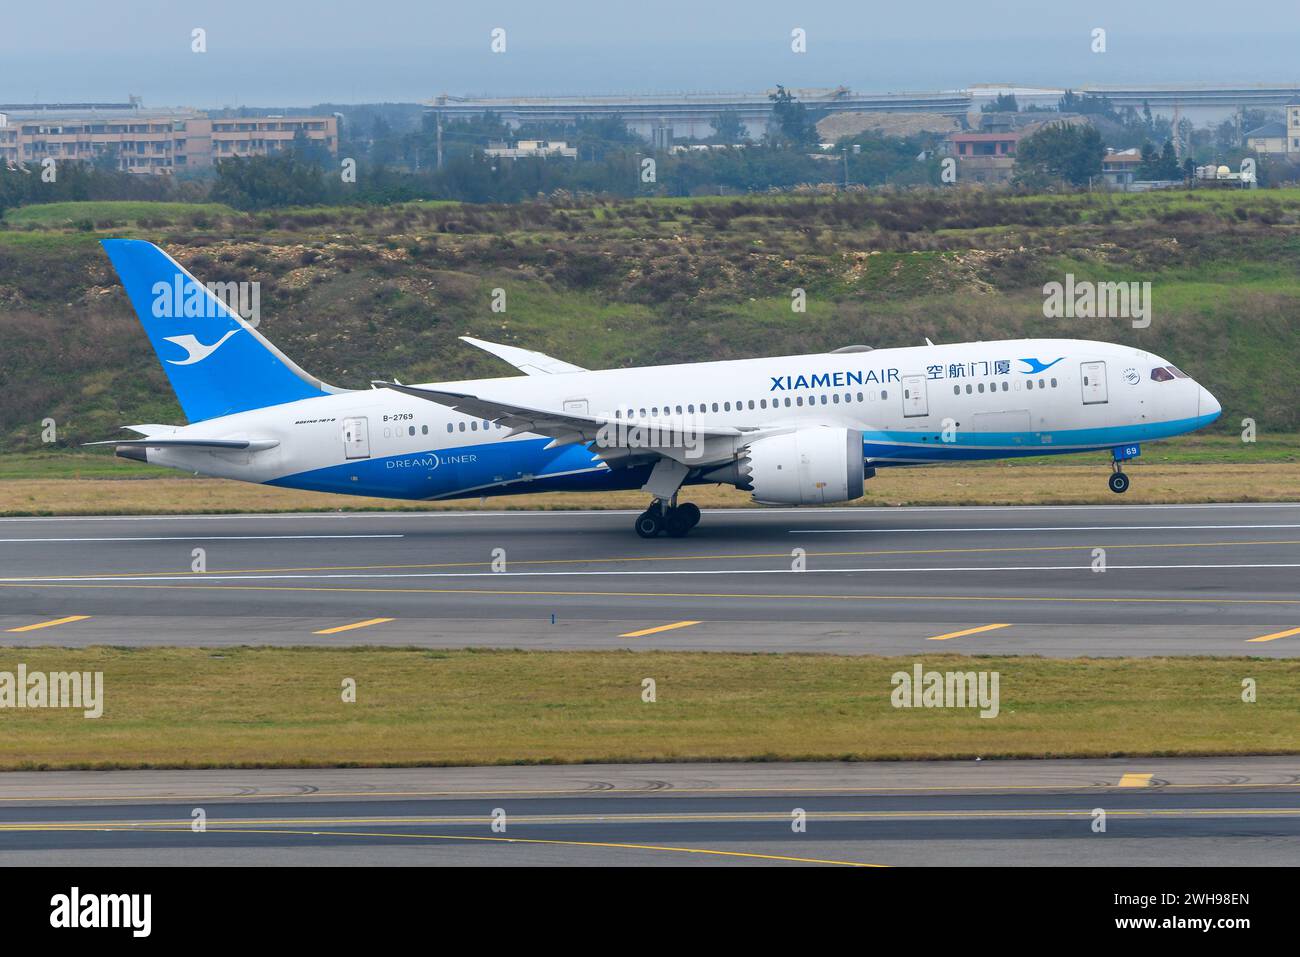 Airplane Boeing 787-8 Dreamliner of XiamenAir, also know as Xiamen Airlines departing. Xiamen Air Boeing 787 aircraft taking off. Stock Photo